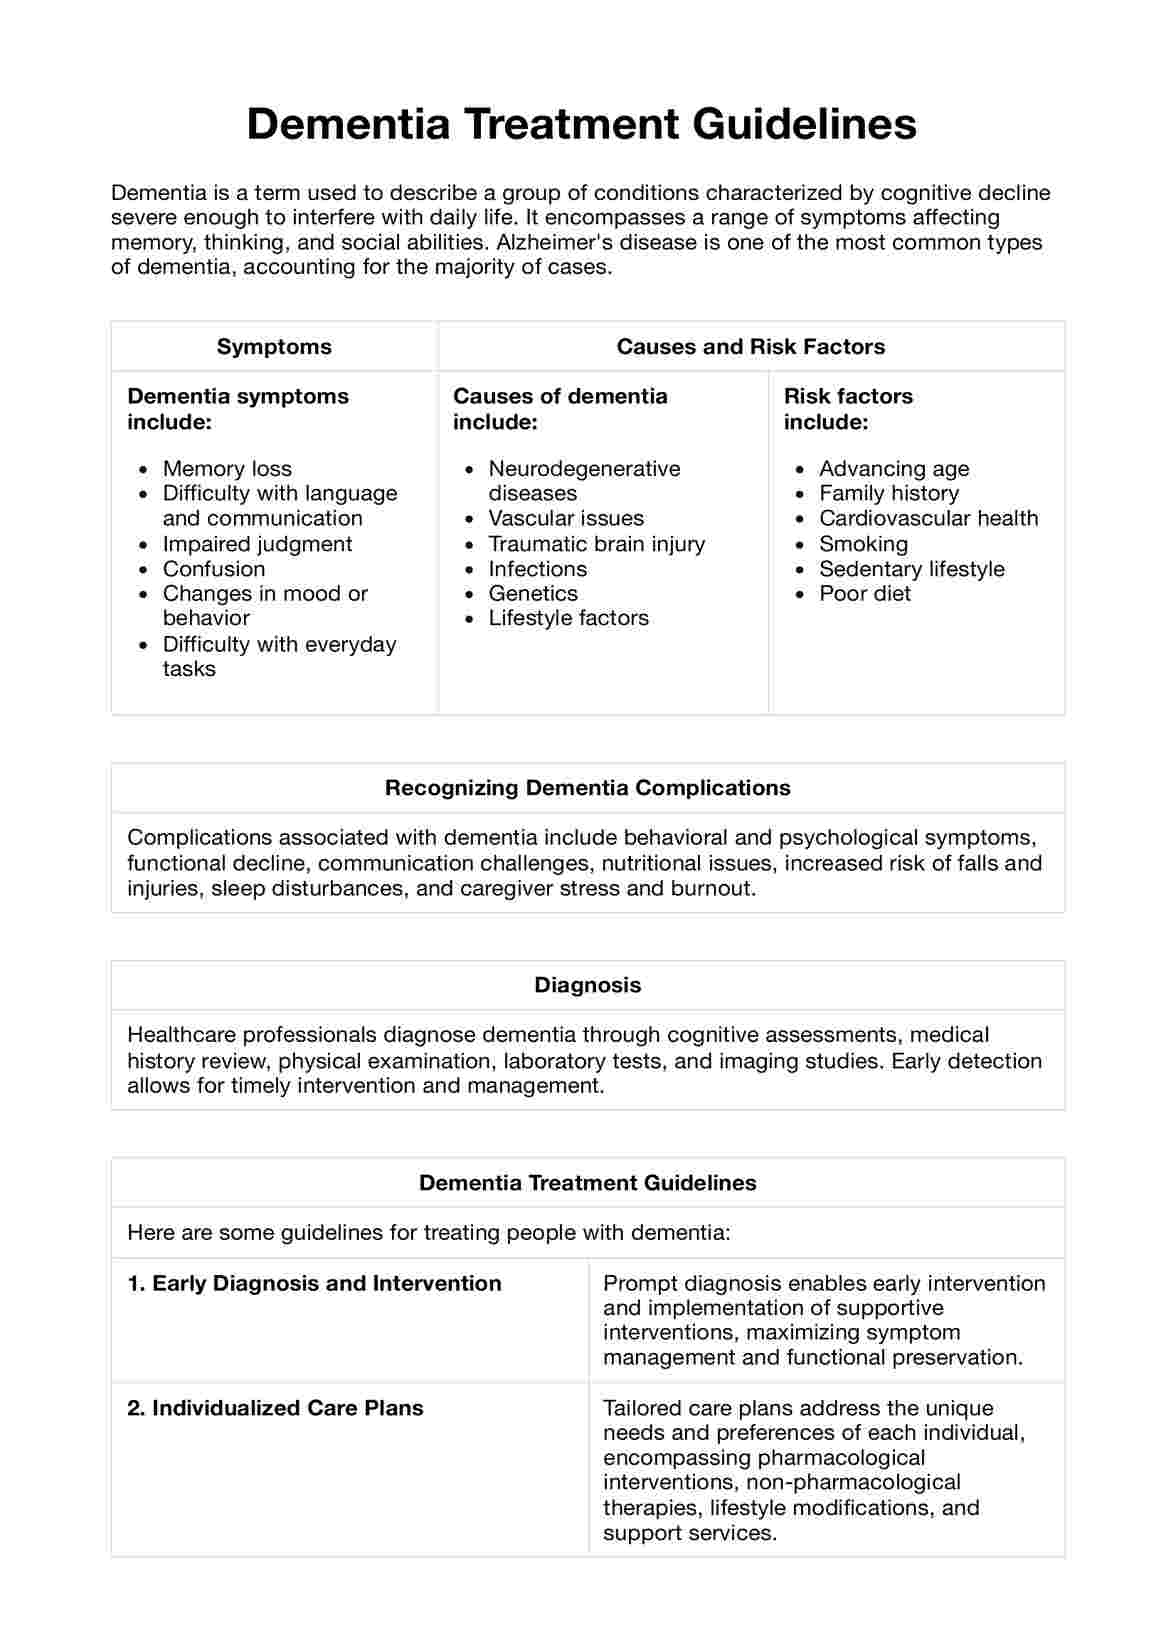 Dementia Treatment Guidelines PDF Example